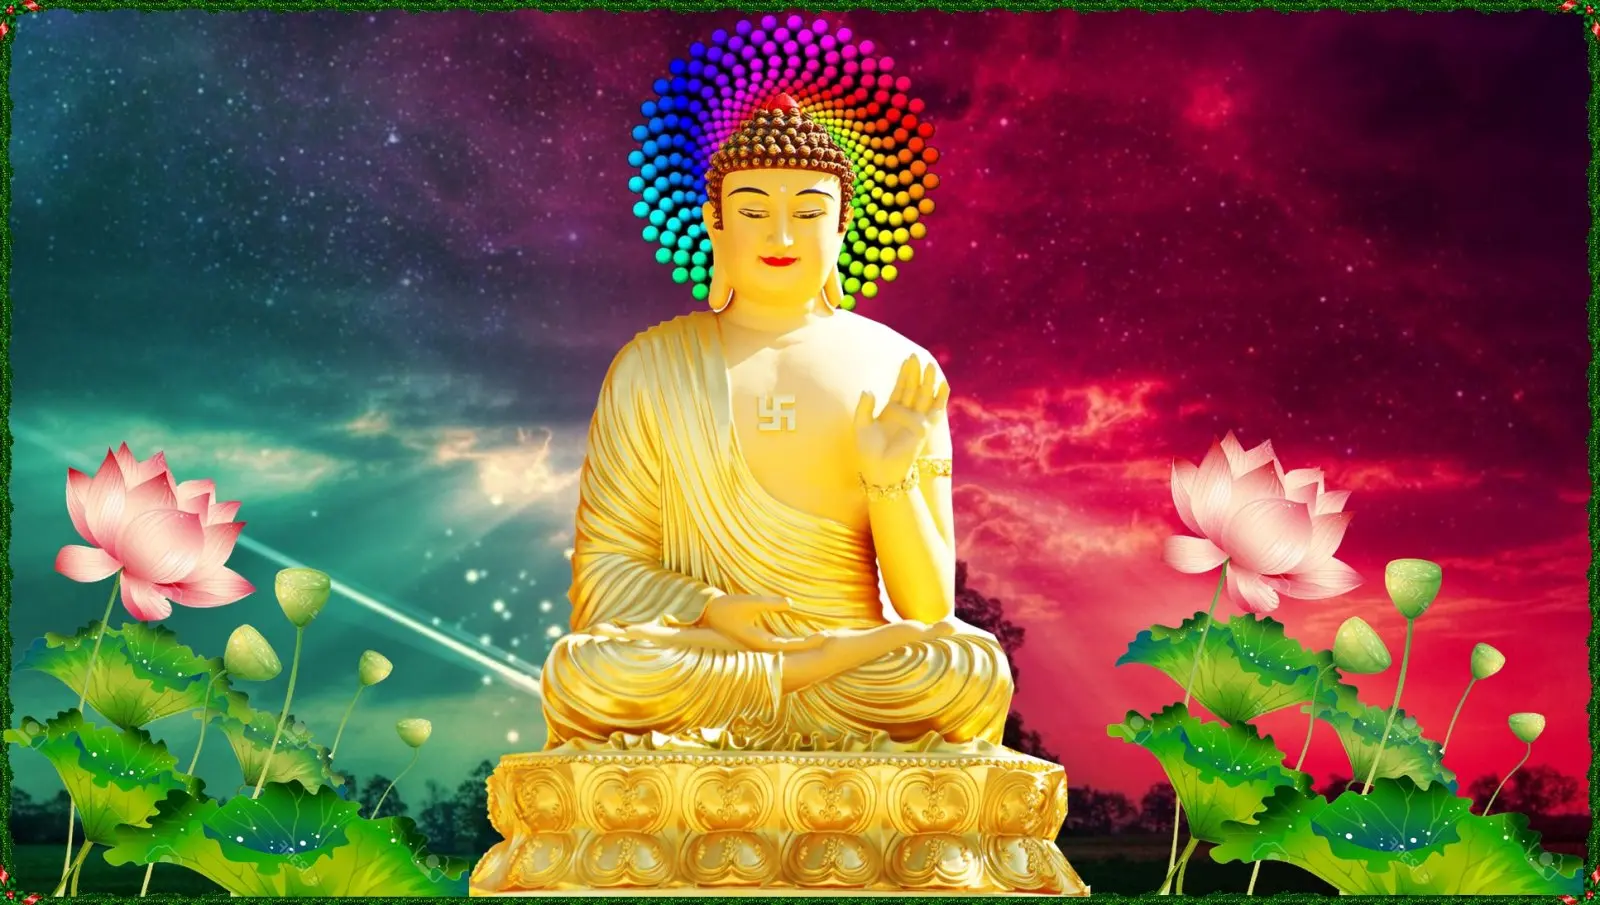 Haruskah saya menyimpan gambar Buddha di dompet saya, sebagai latar belakang komputer atau ponsel?